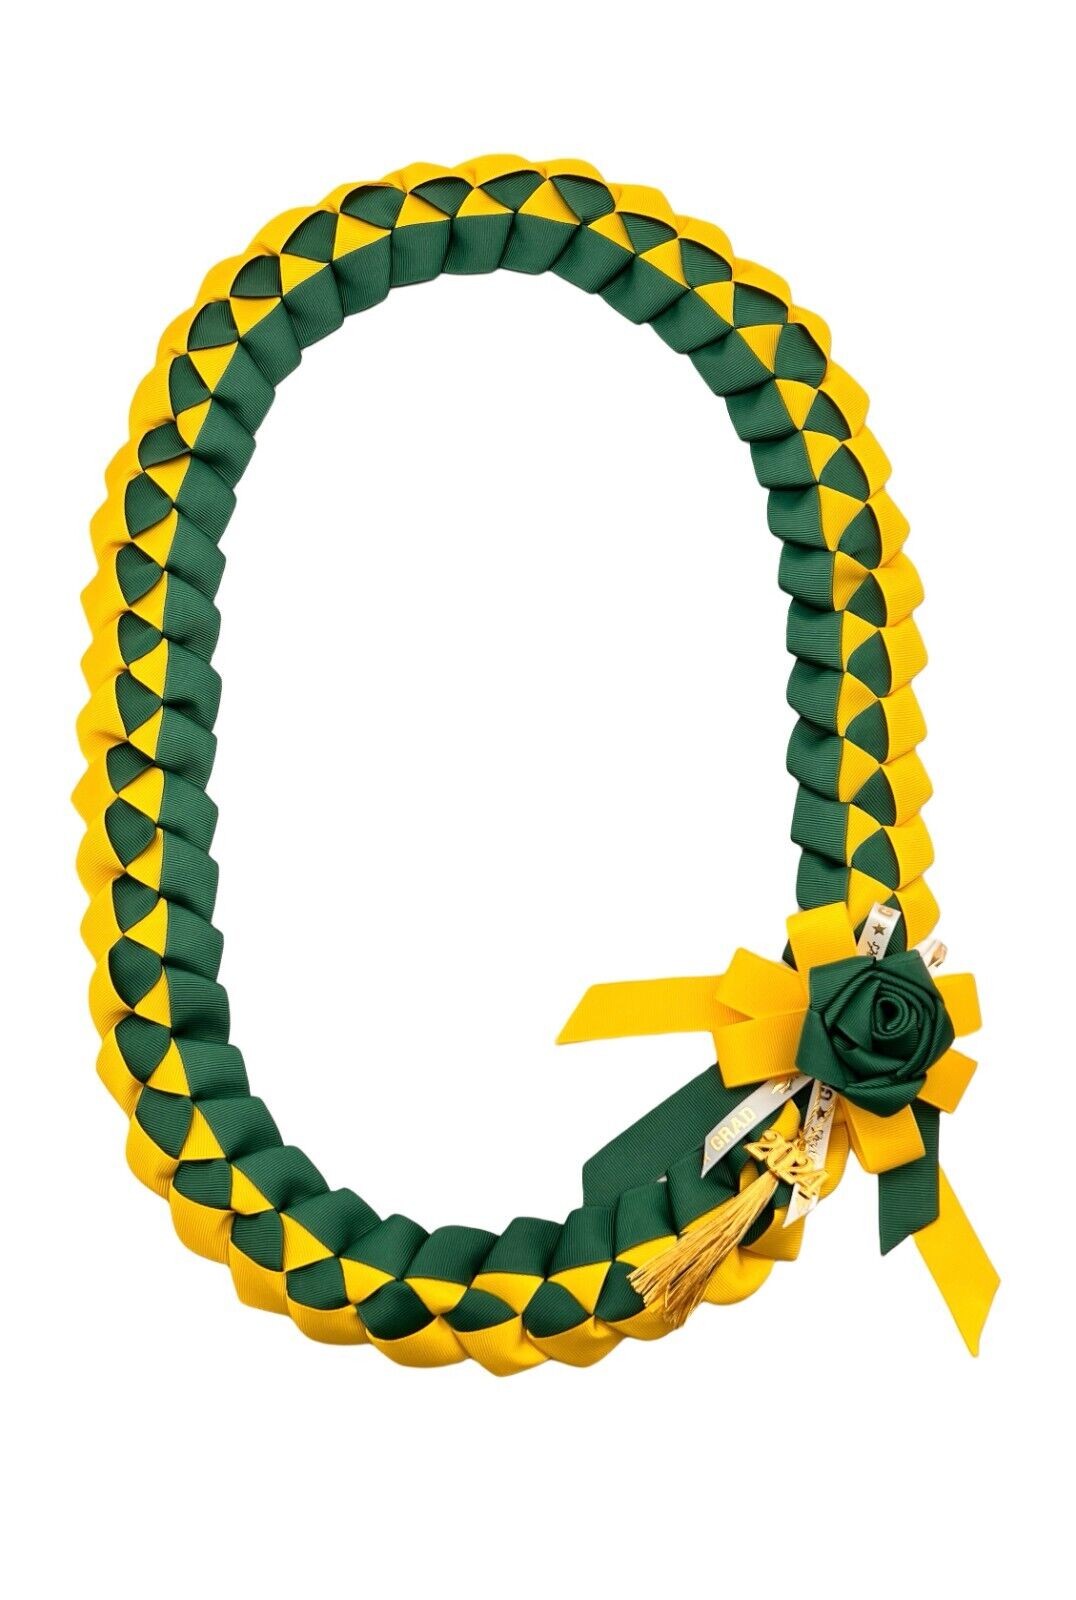 Grosgrain Ribbon Graduation Leis-Yellow & Green School Colors 